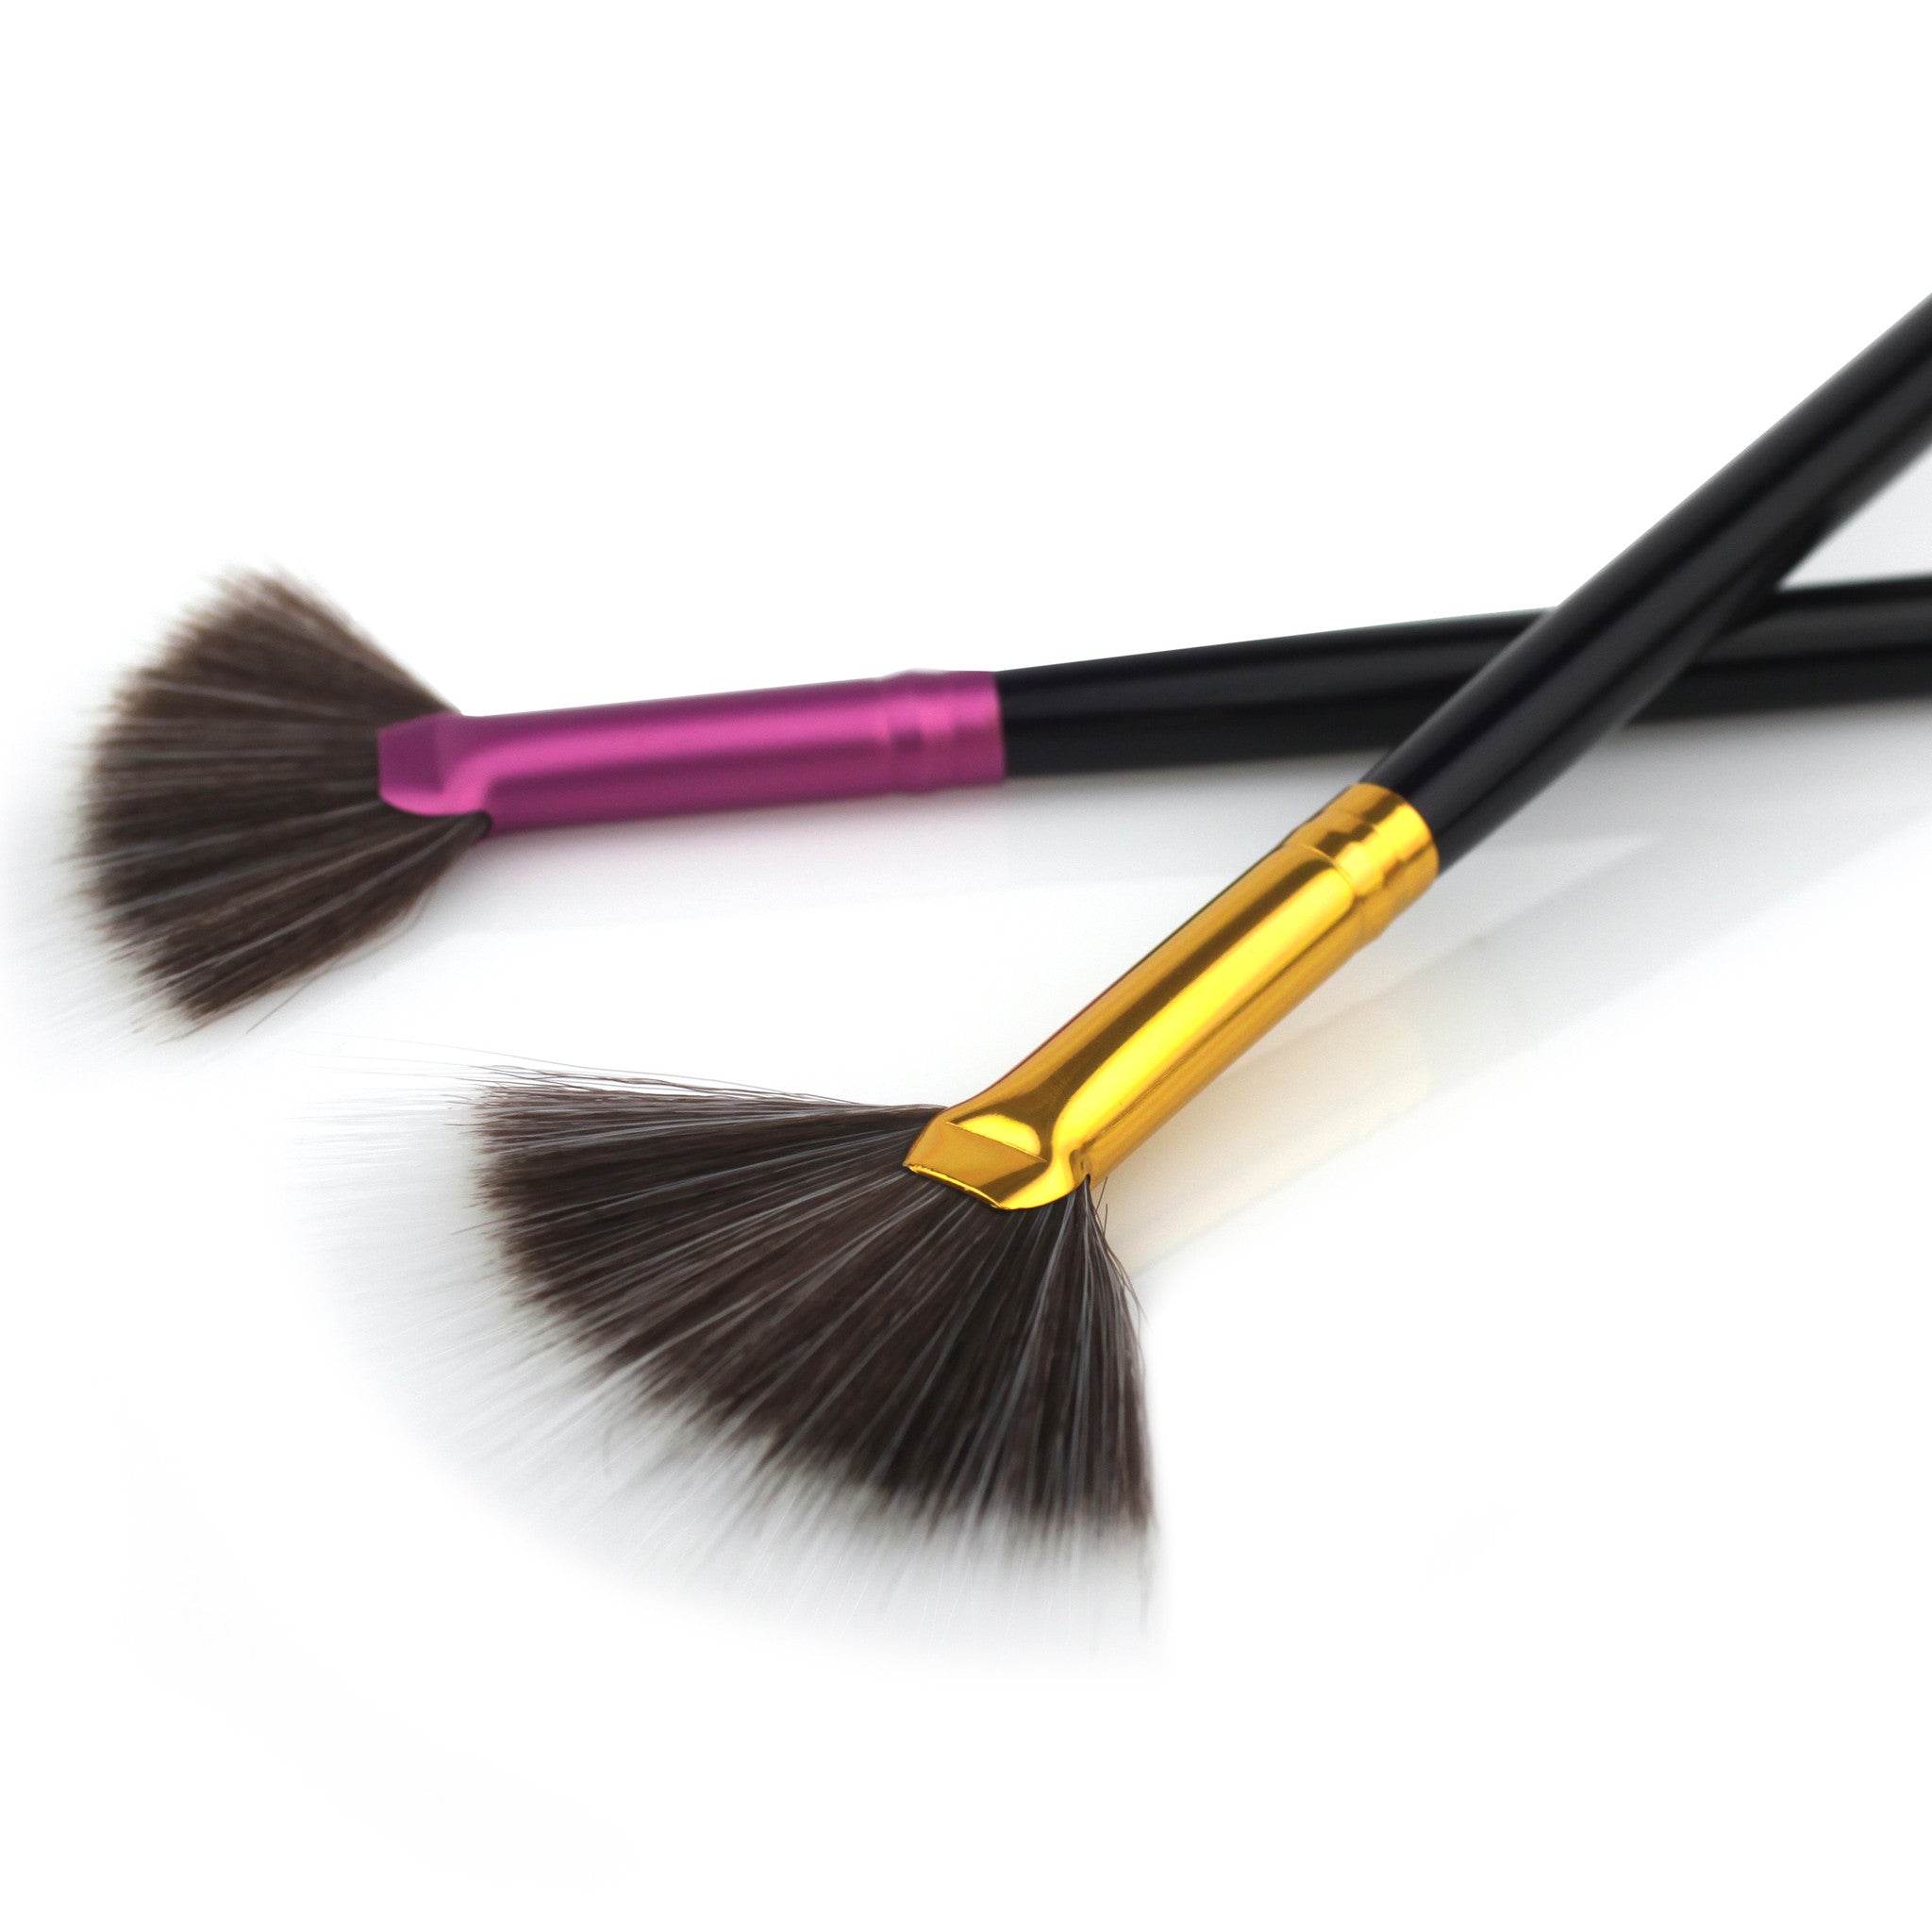 Duo-fibre Fan - 13rushes - Singapore's best makeup brushes